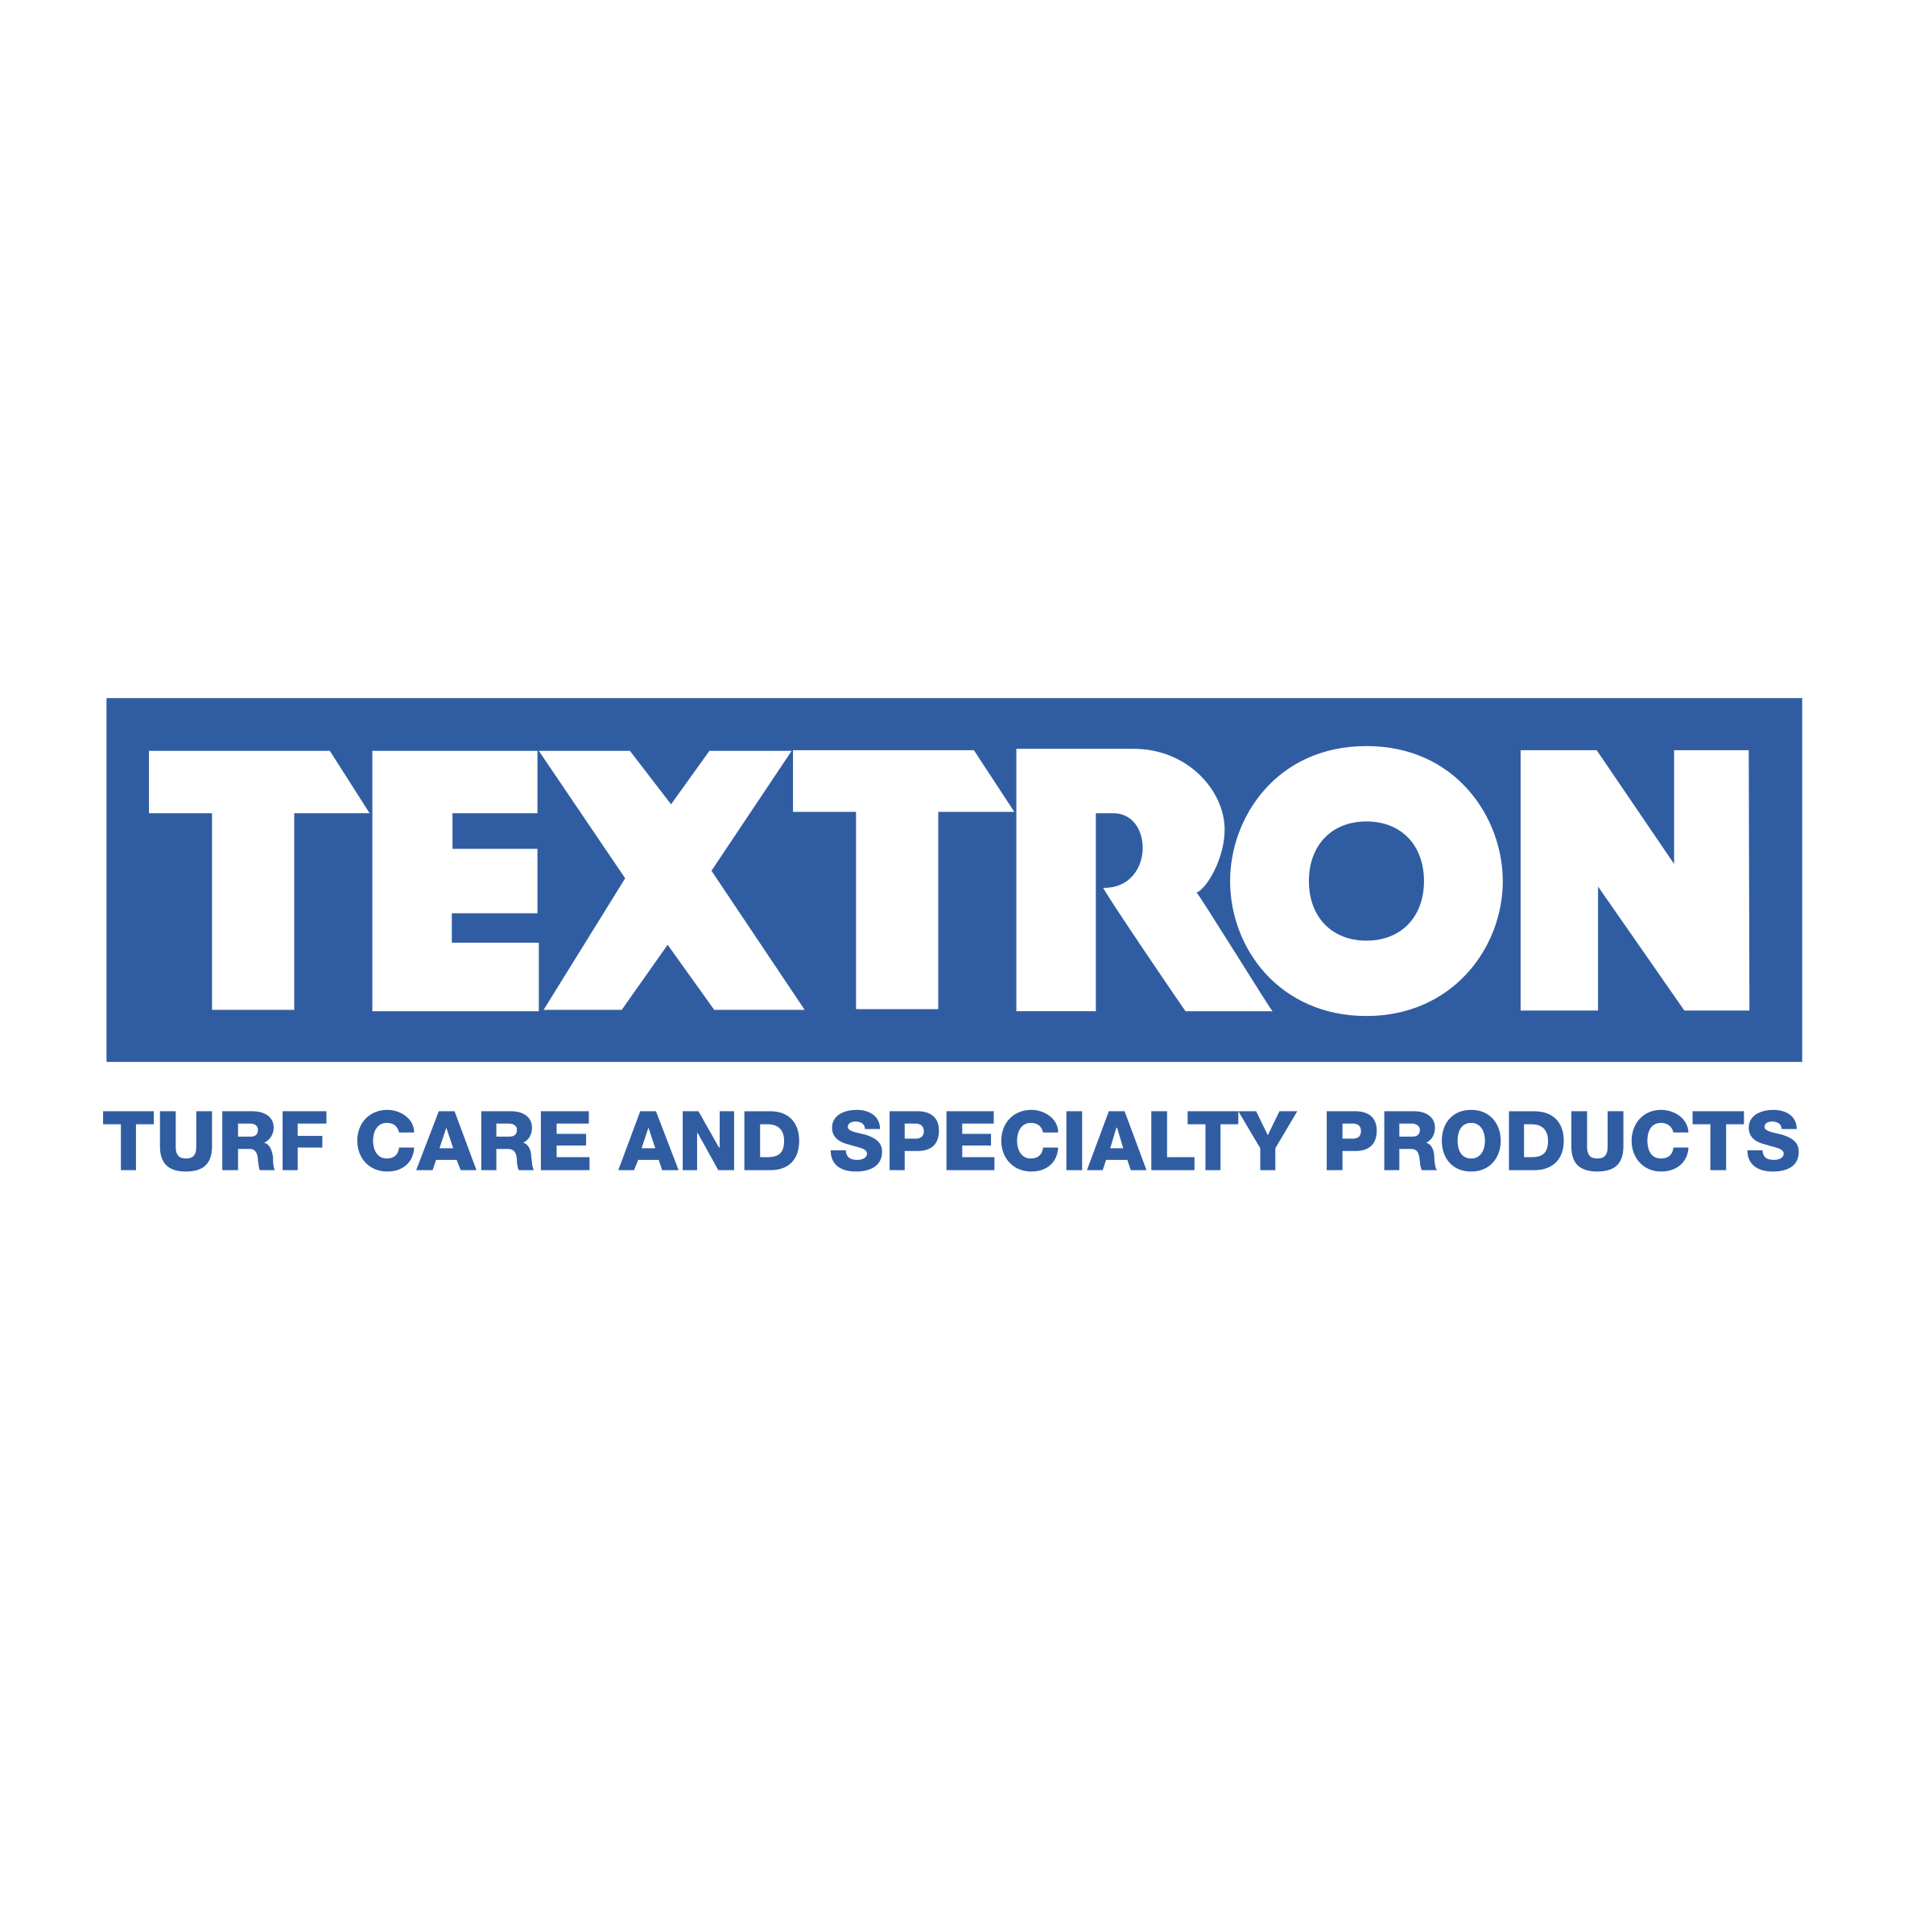 Textron Logo - Textron Logo PNG Transparent & SVG Vector - Freebie Supply